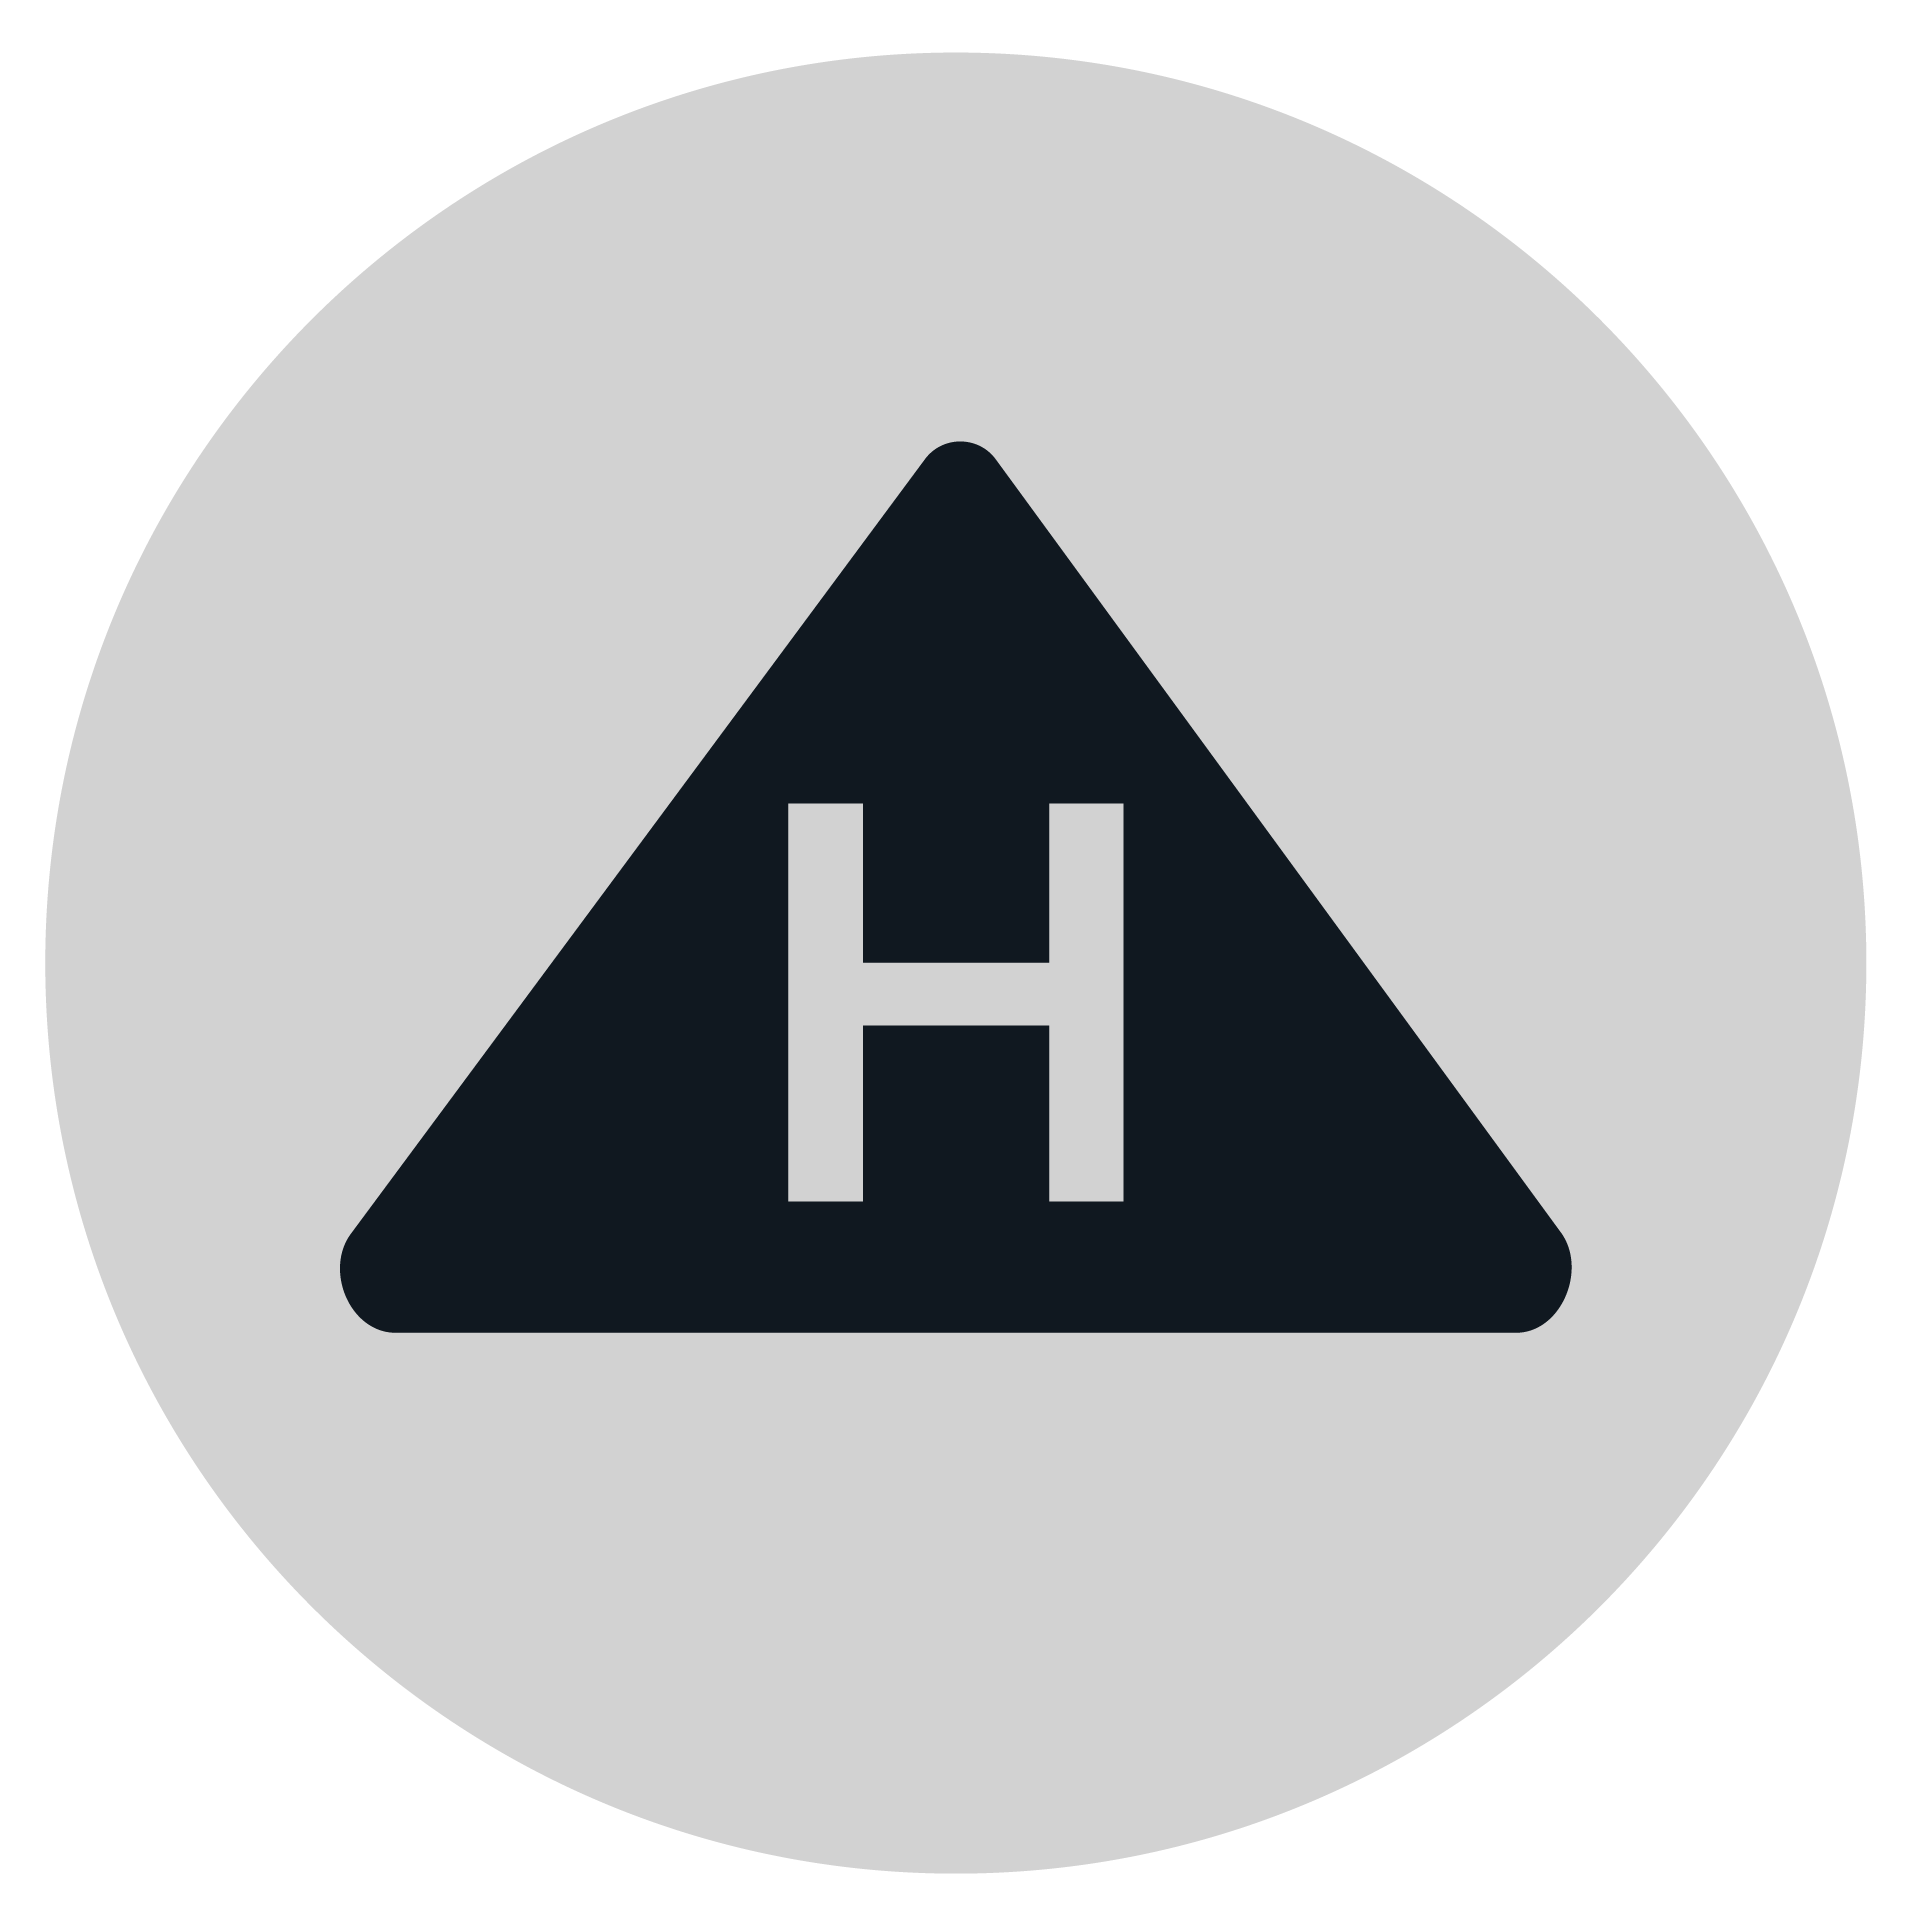 Hydrogen-Gas Detector